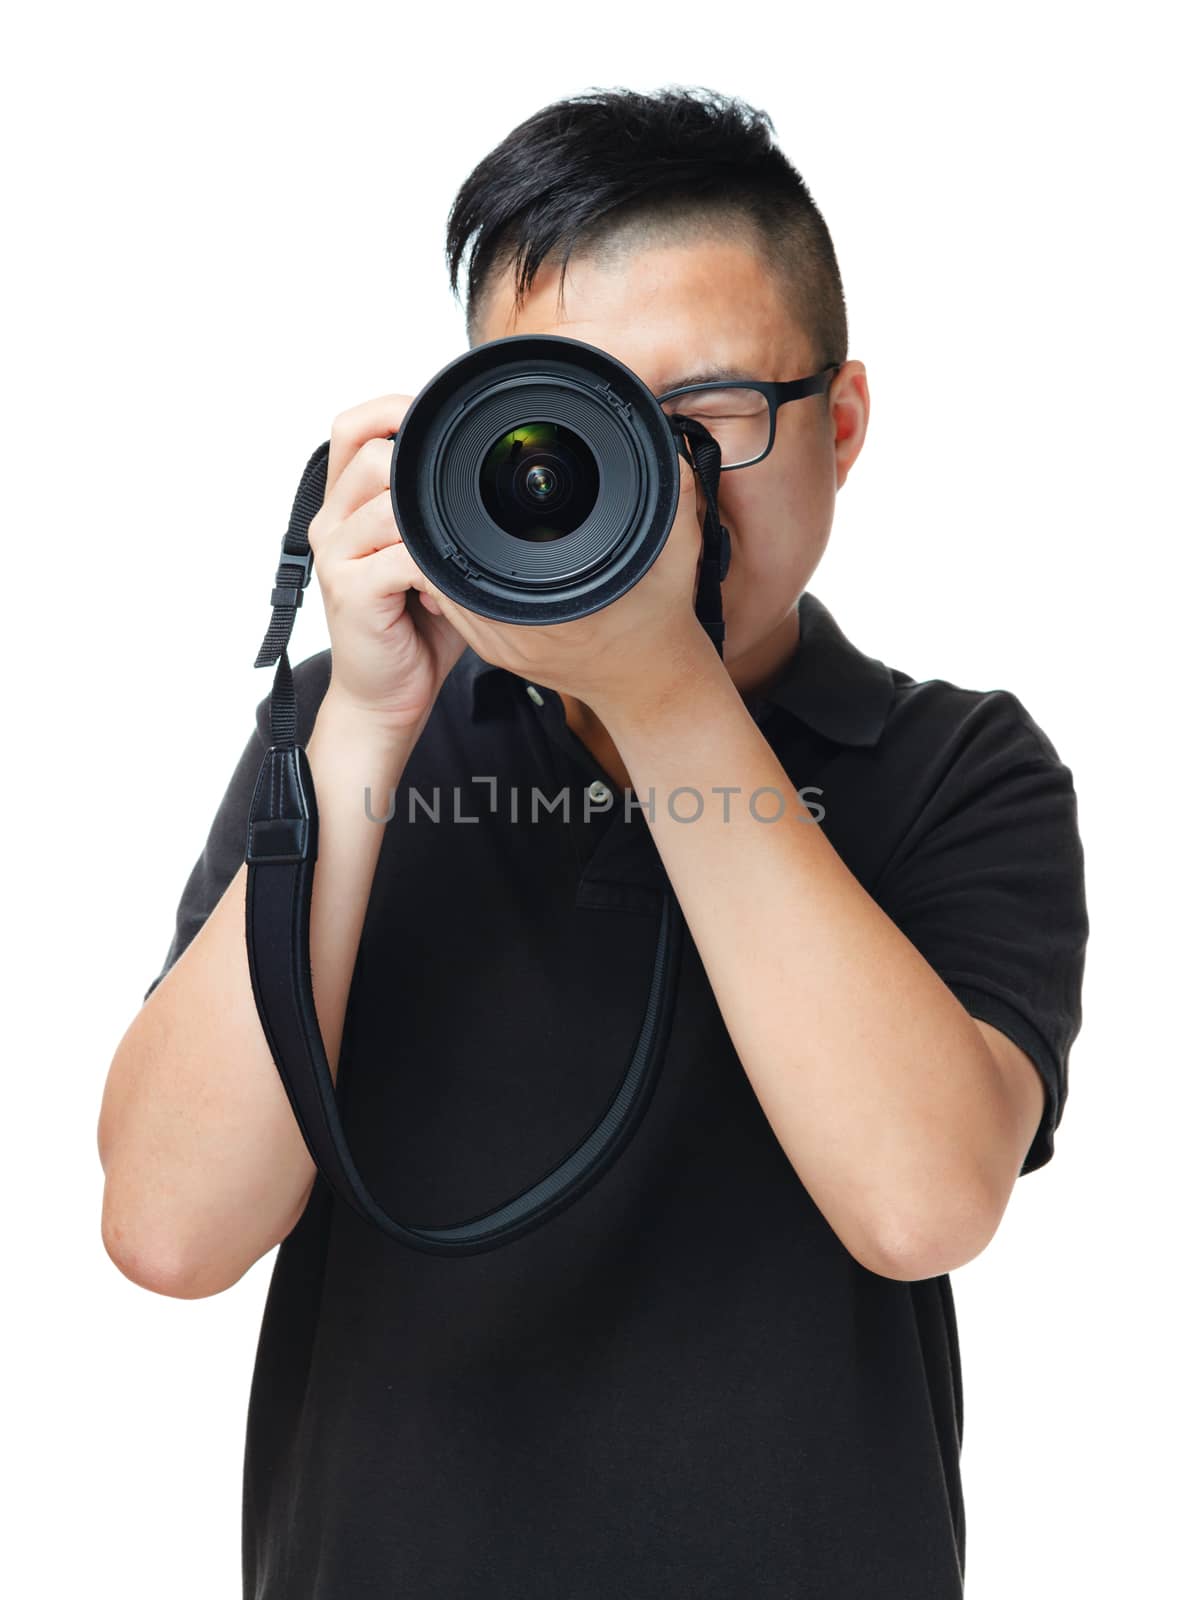 Asian man using camera by leungchopan